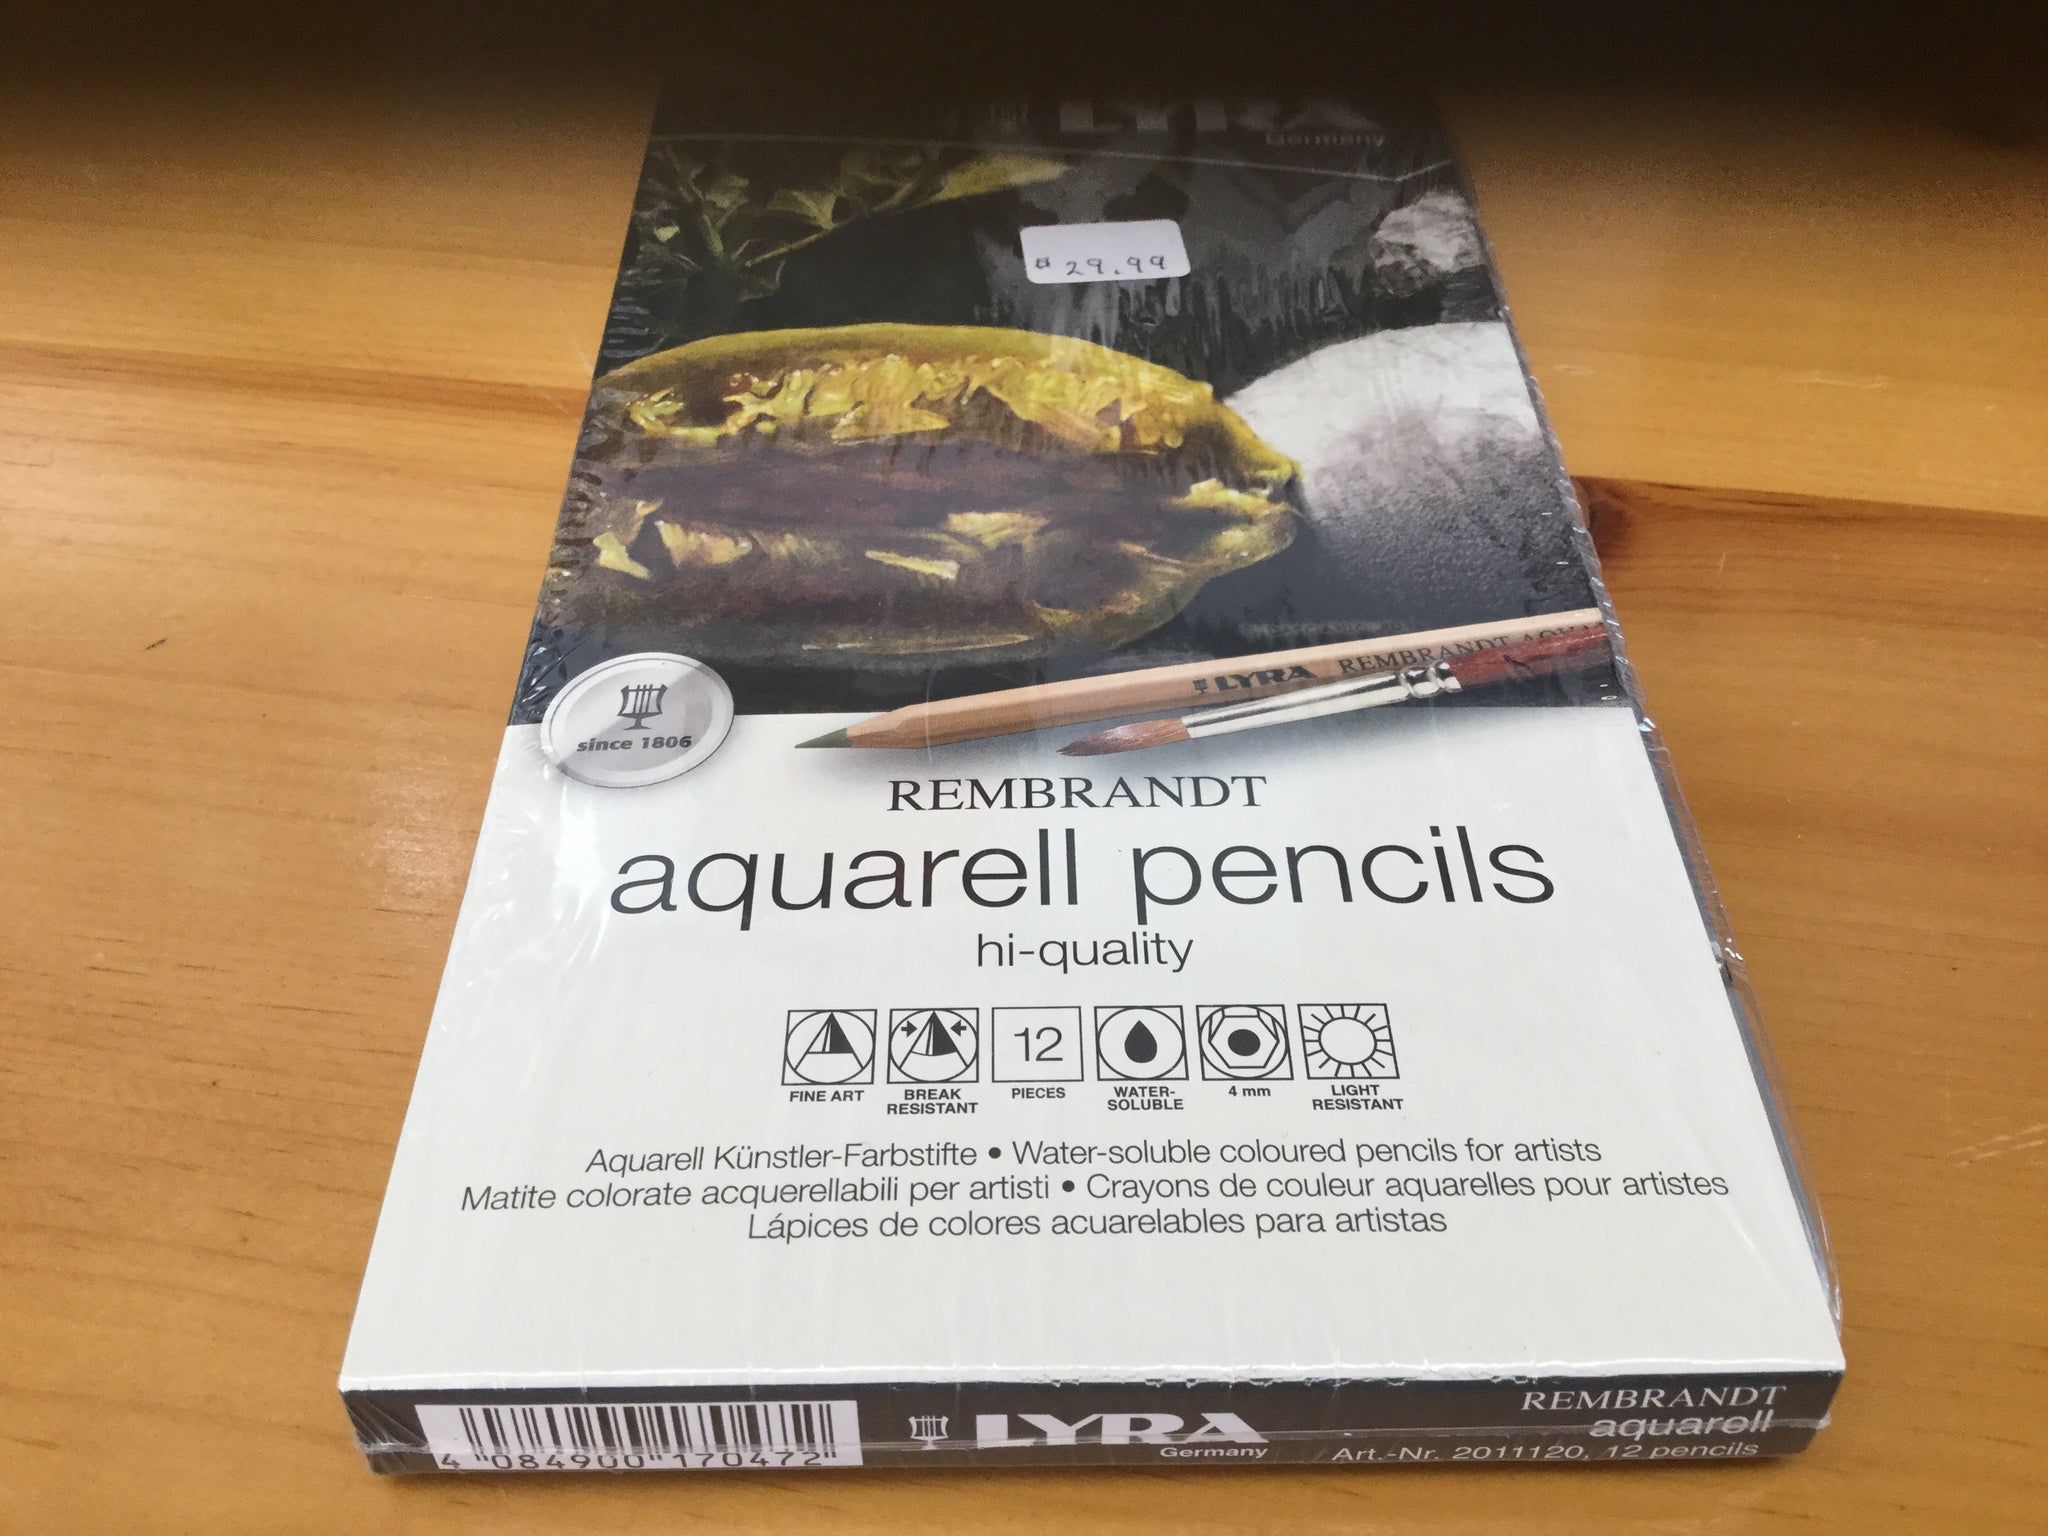 Lyra - aquacolor hi-quality crayon pastel sets